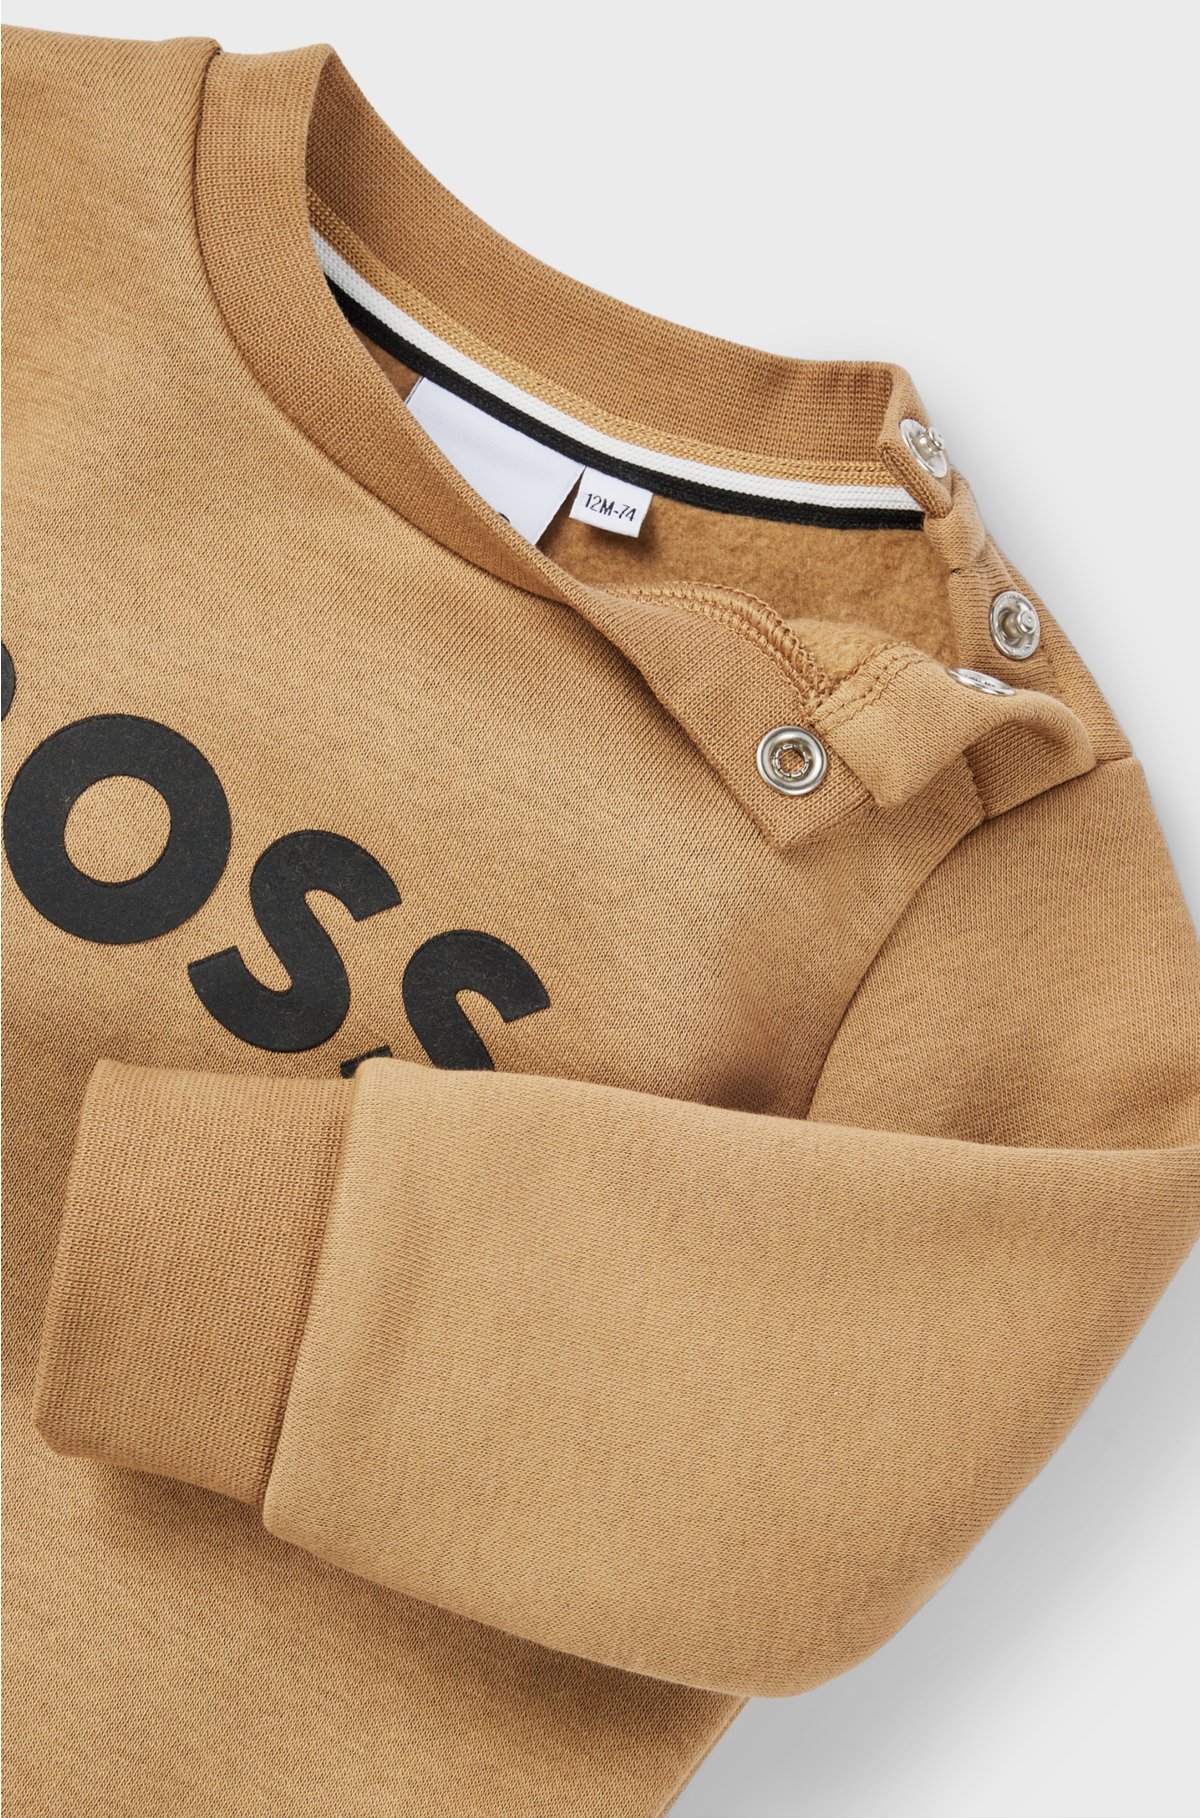 Kids' cotton-blend sweatshirt with logo print, Brown